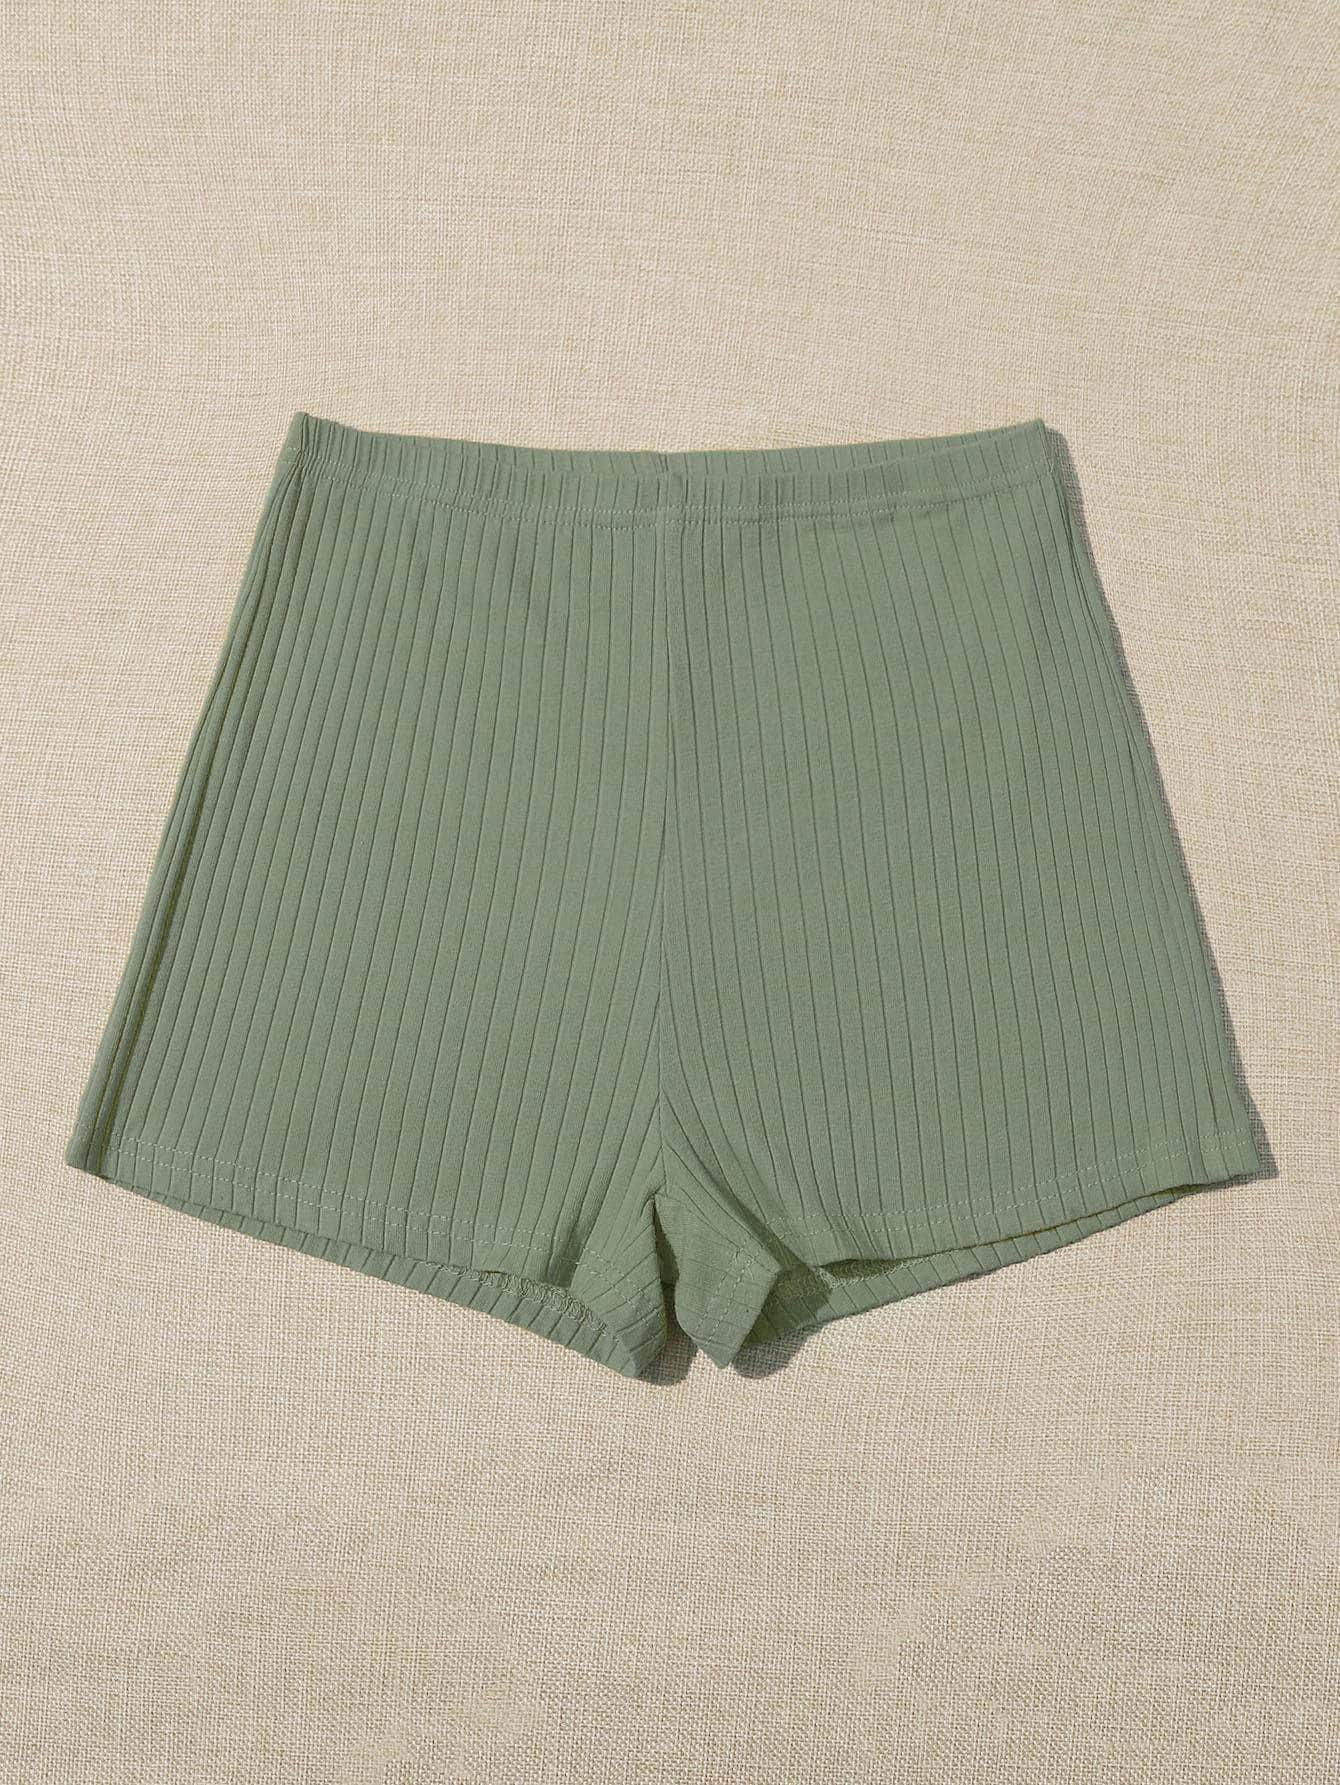 Verde militar / L SHEIN Shorts tejido de canalé de cintura elástica